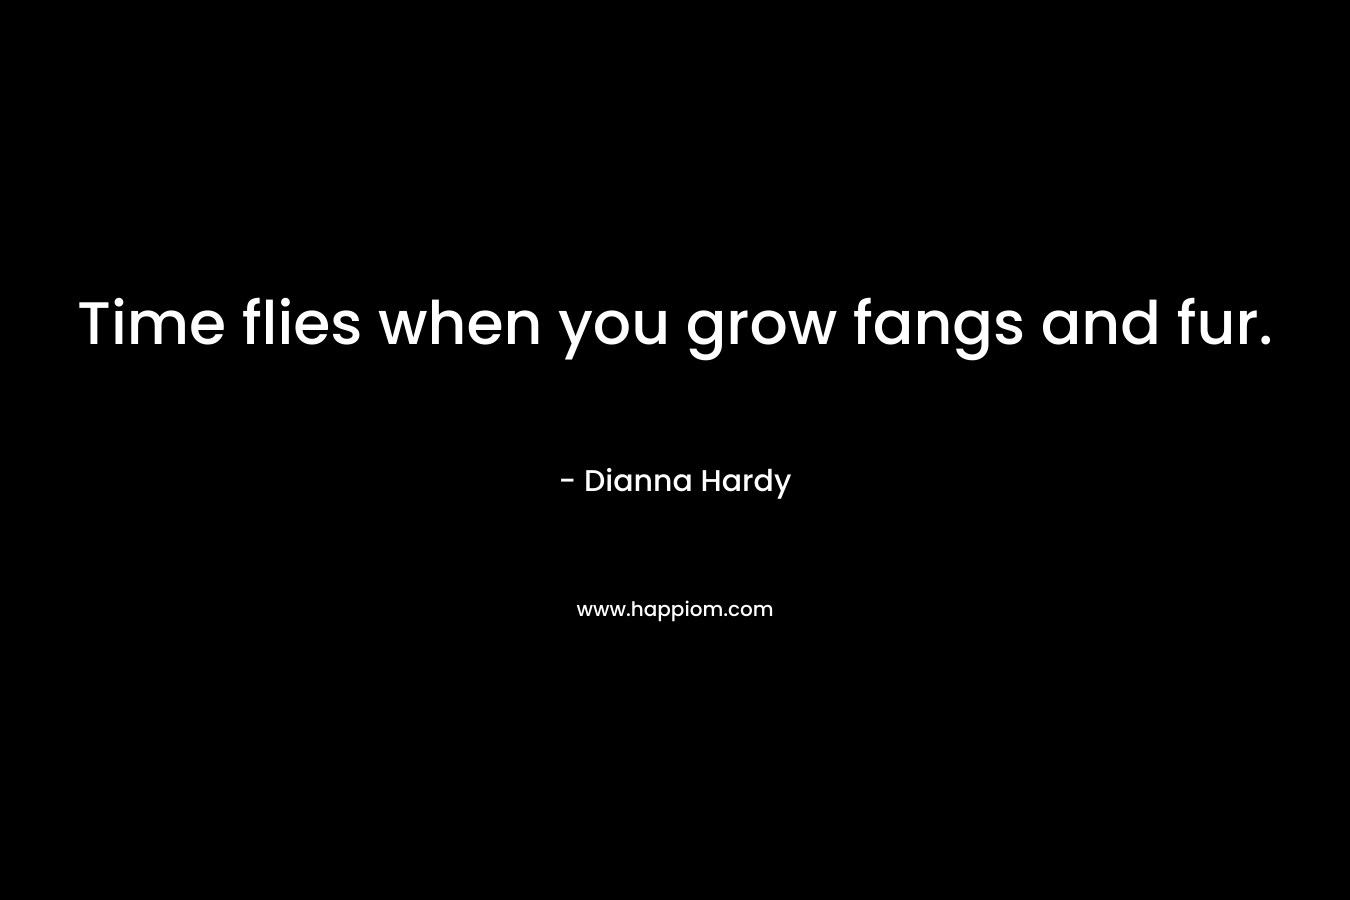 Time flies when you grow fangs and fur. – Dianna Hardy